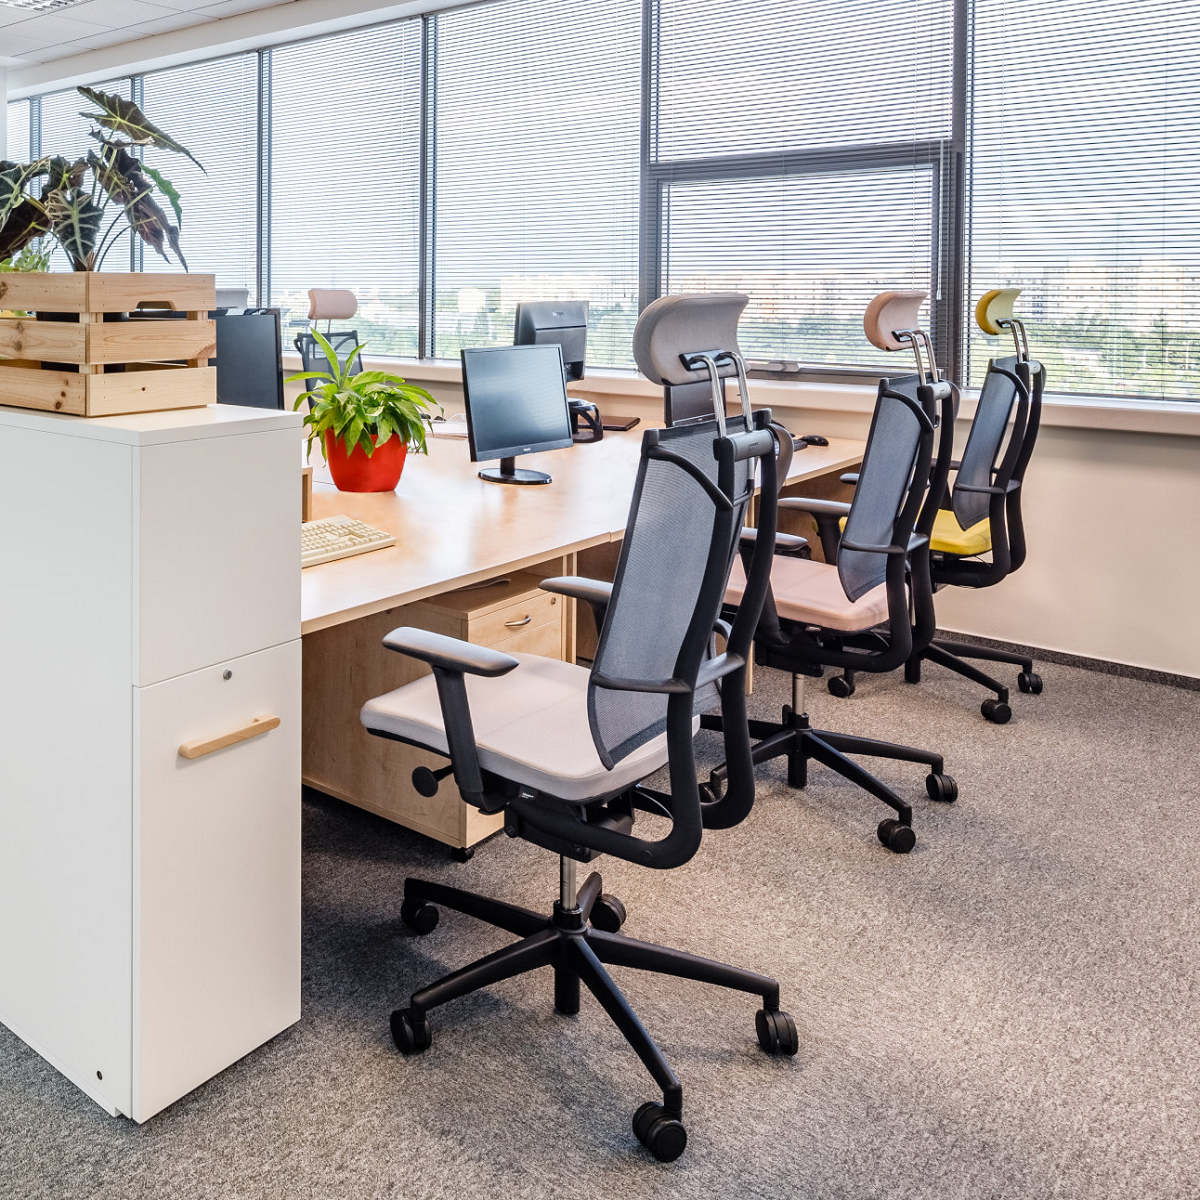 Ergonomie : qu'est-ce qui rend un siège de bureau ergonomique ?